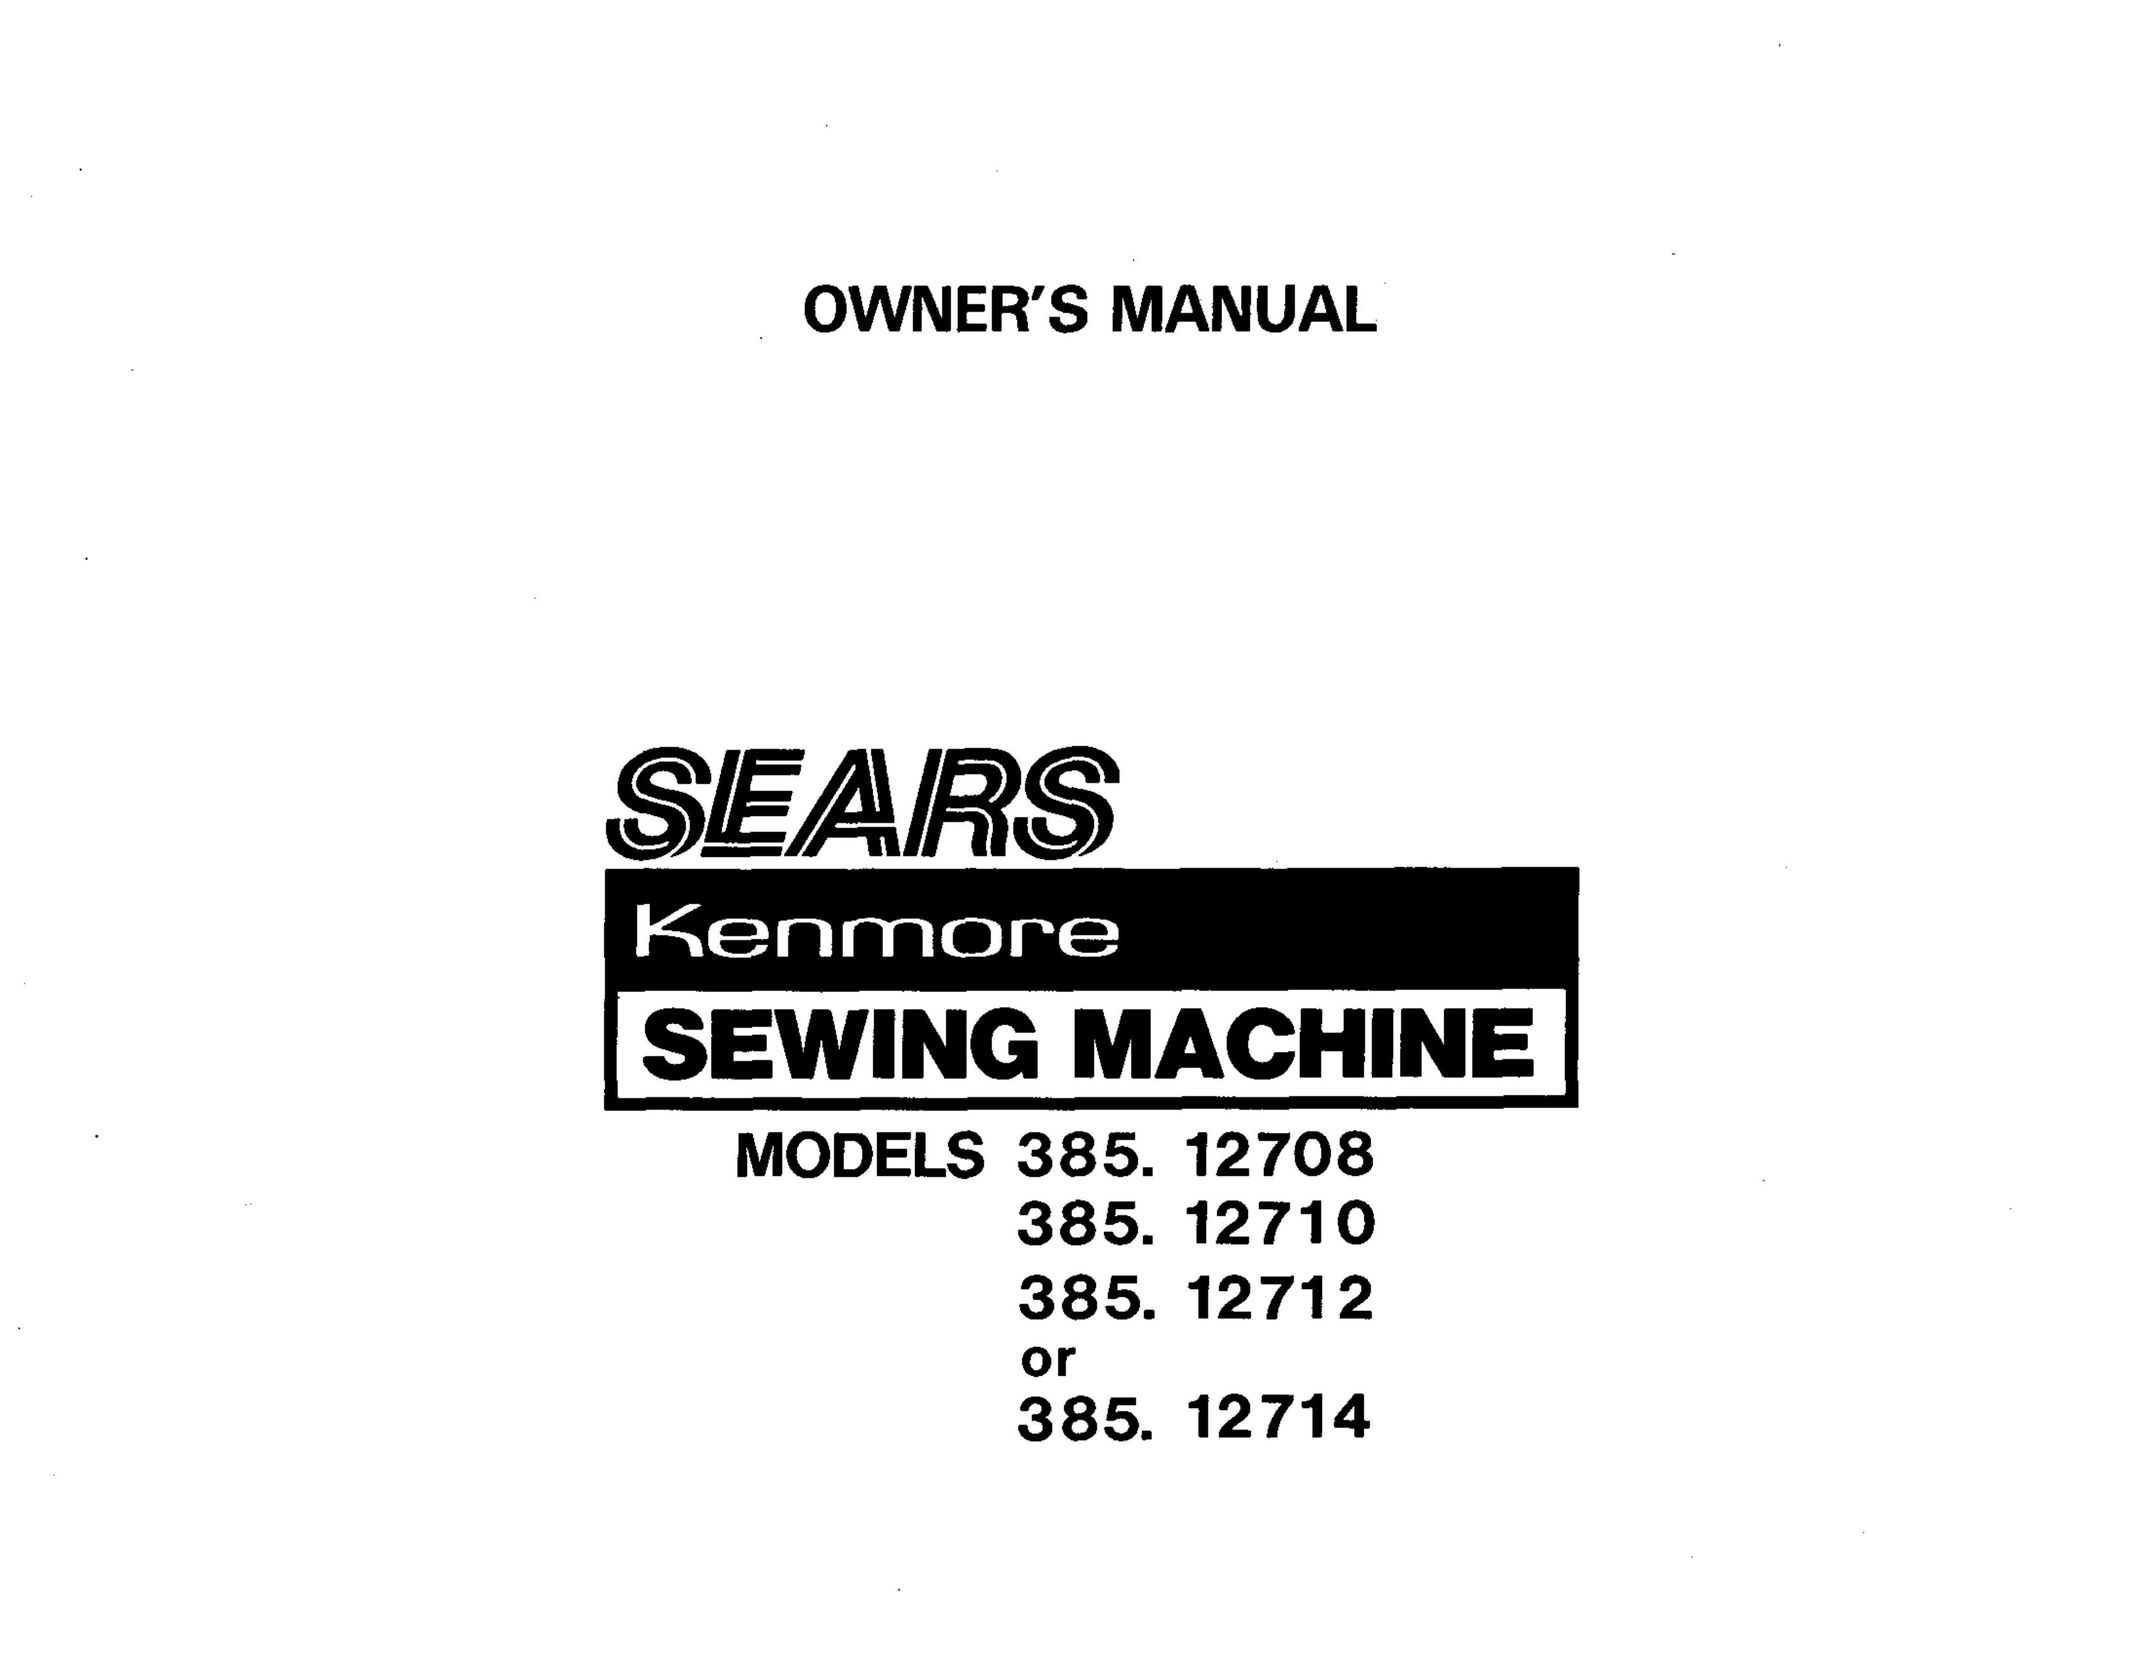 Sears 385. 12712 Sewing Machine User Manual